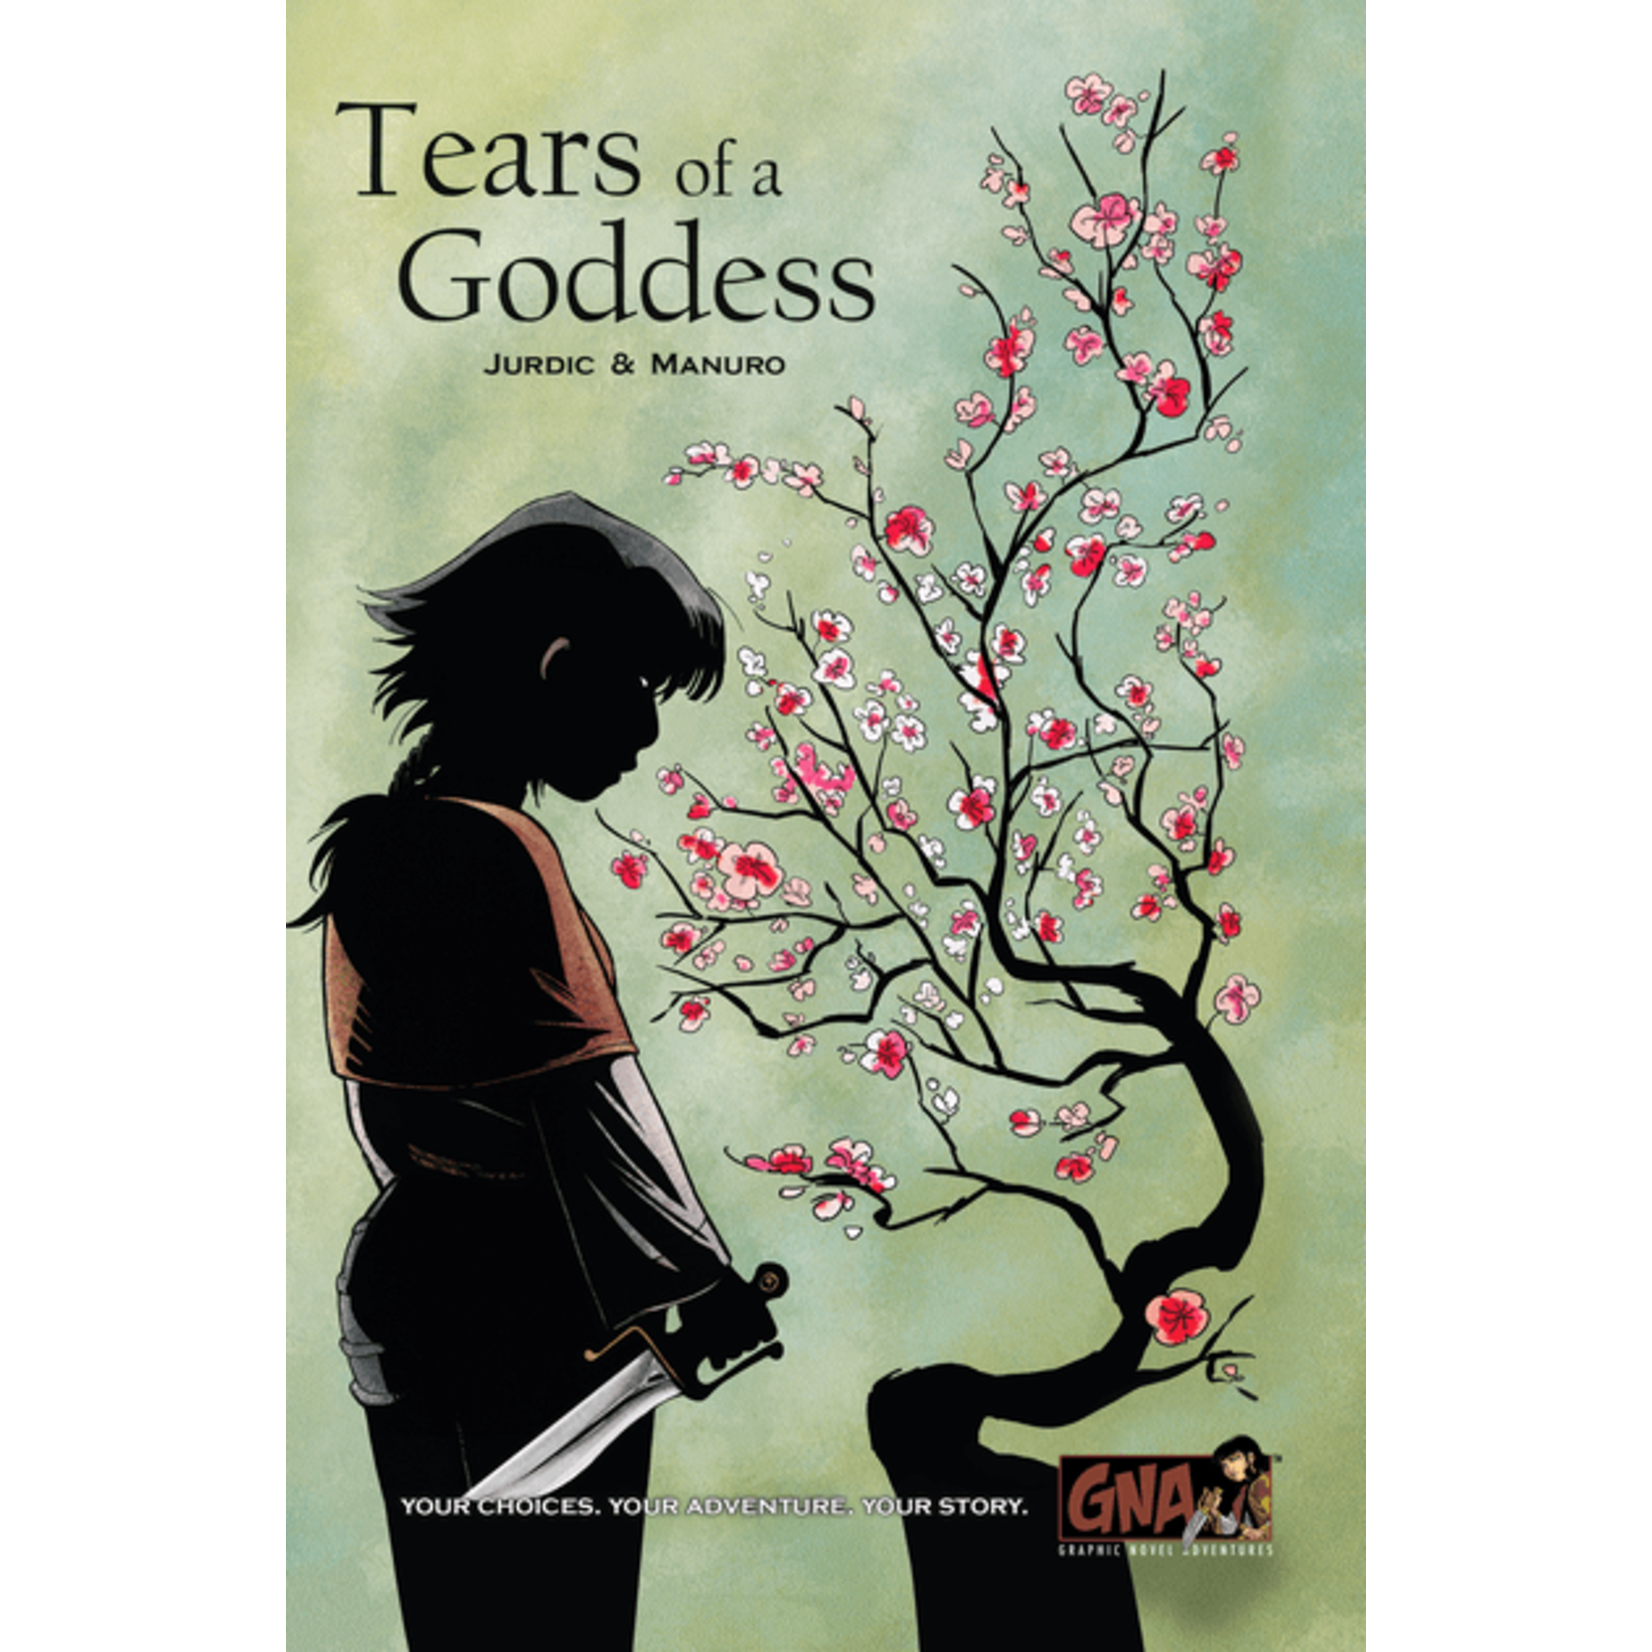 Tears of a Goddess Graphic Novel Adventure